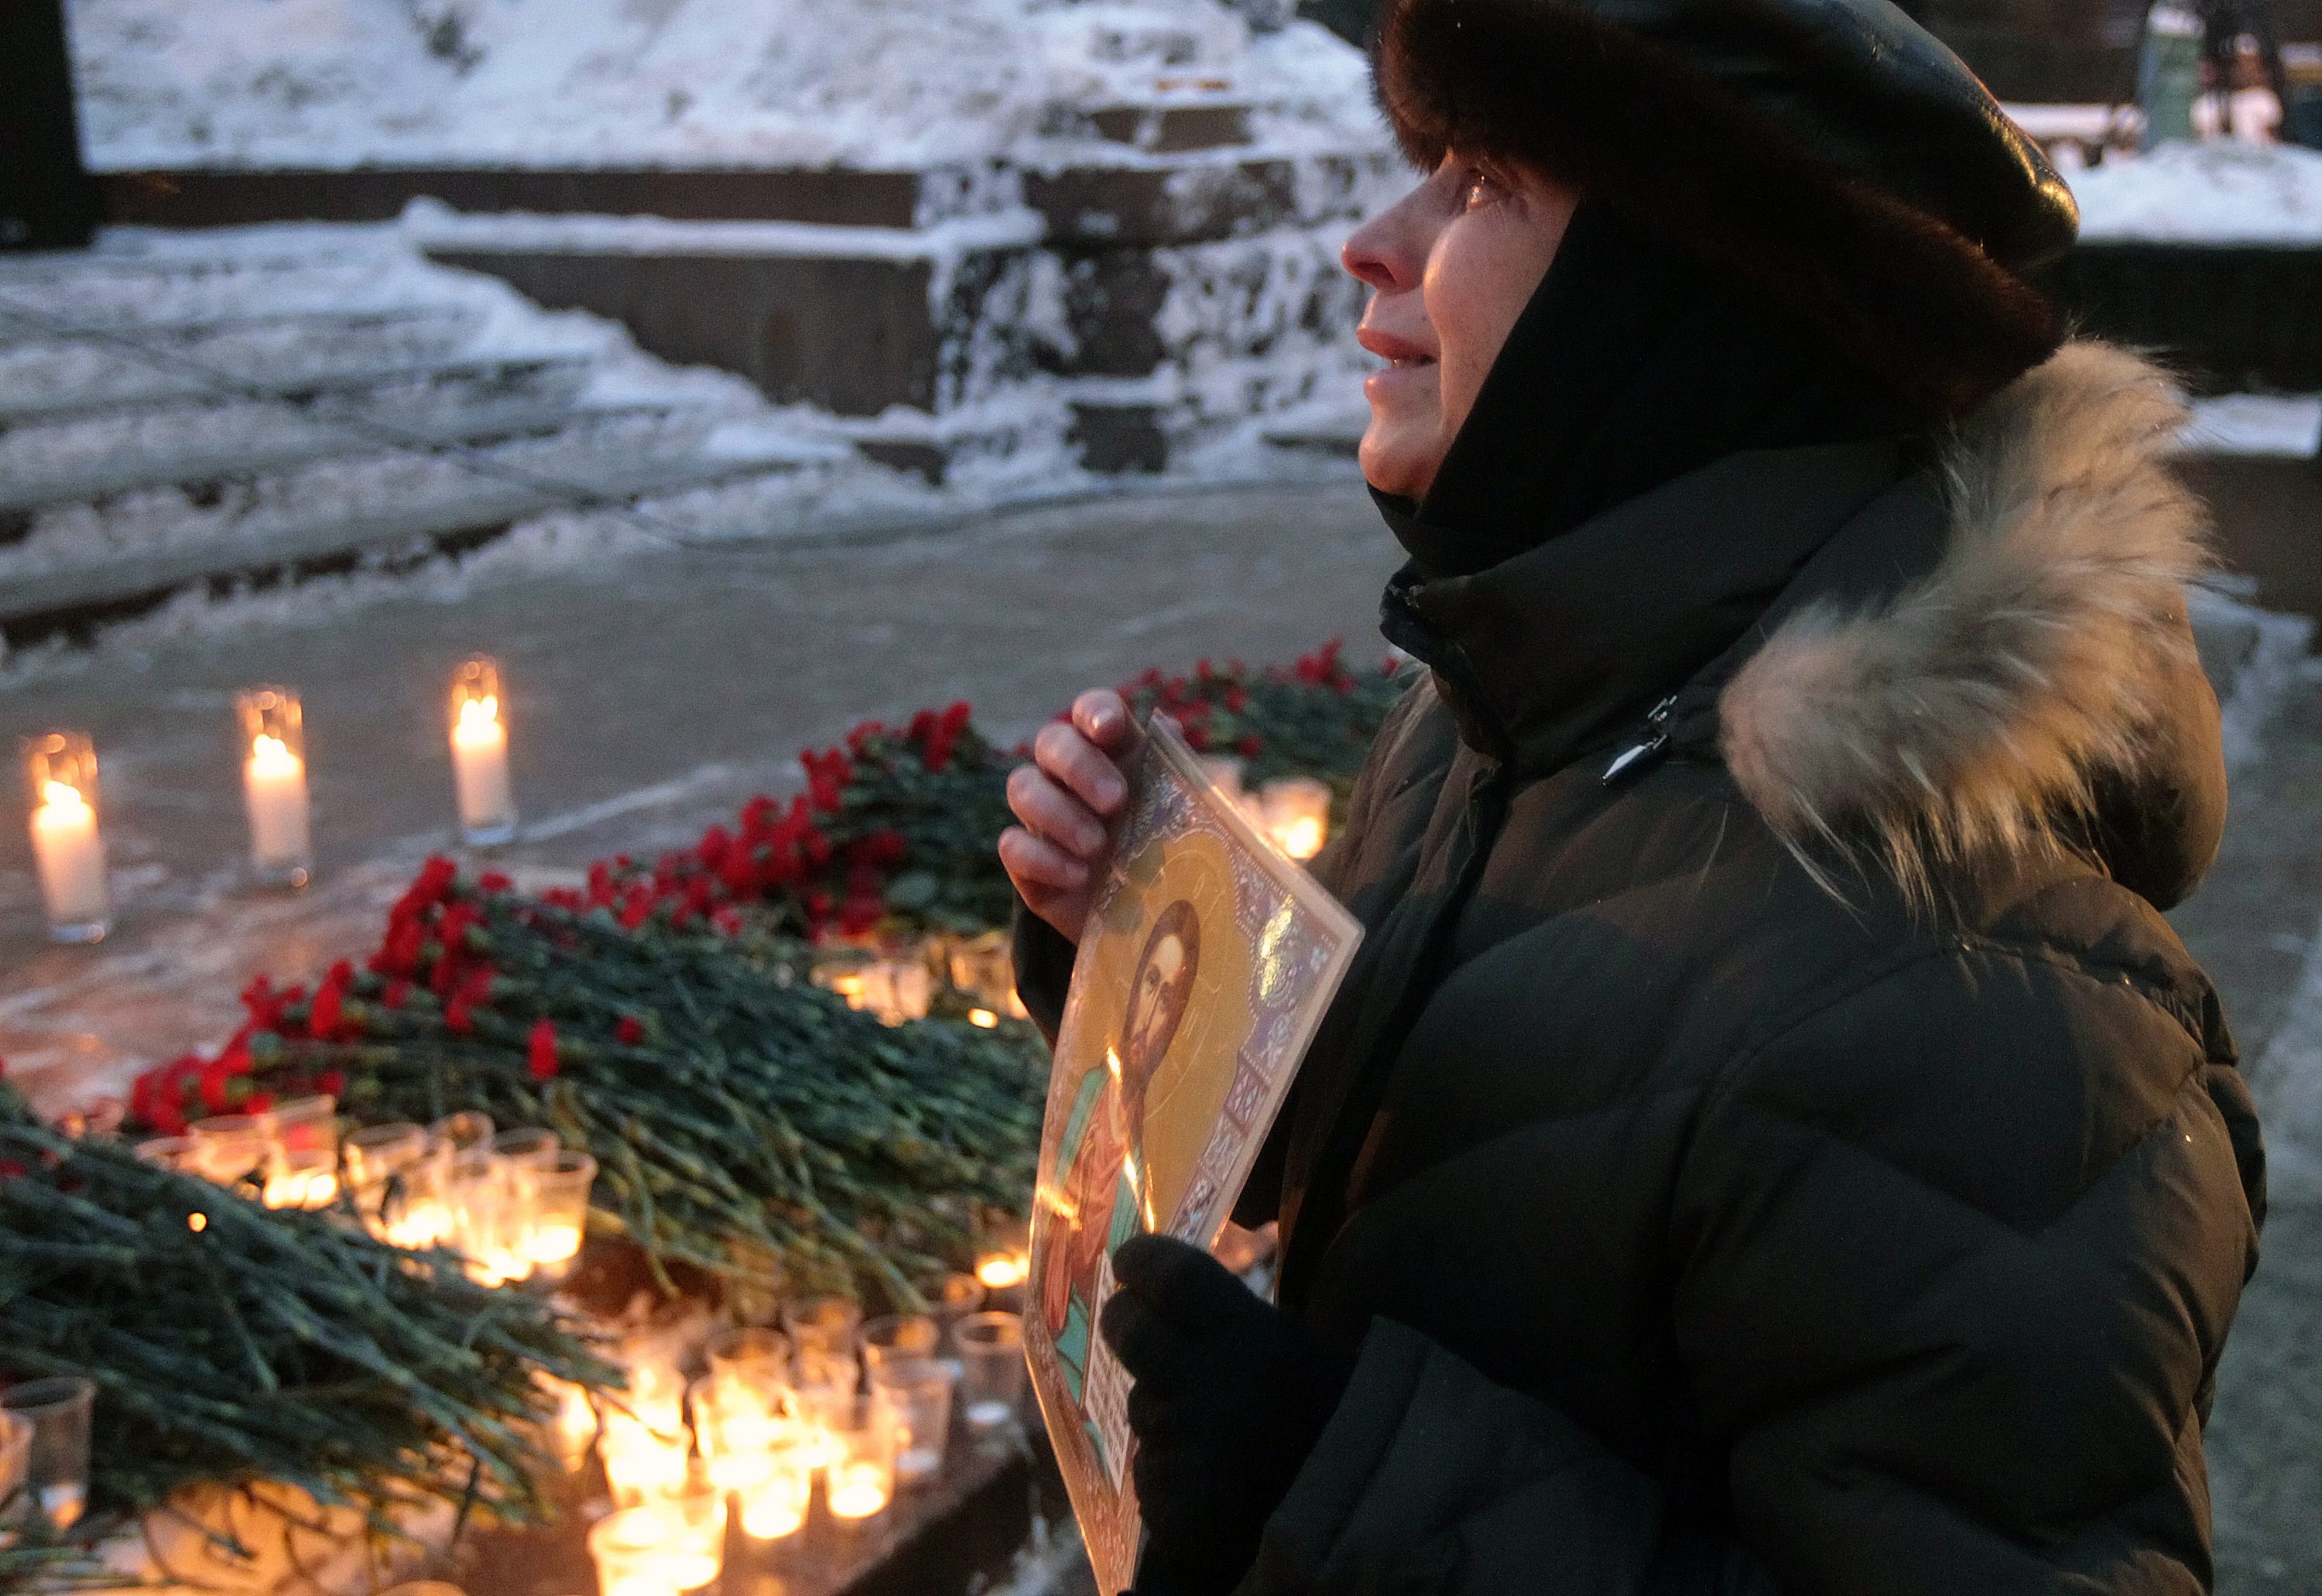 Майката на атентатора от ”Домодедово”: Срам ме е!